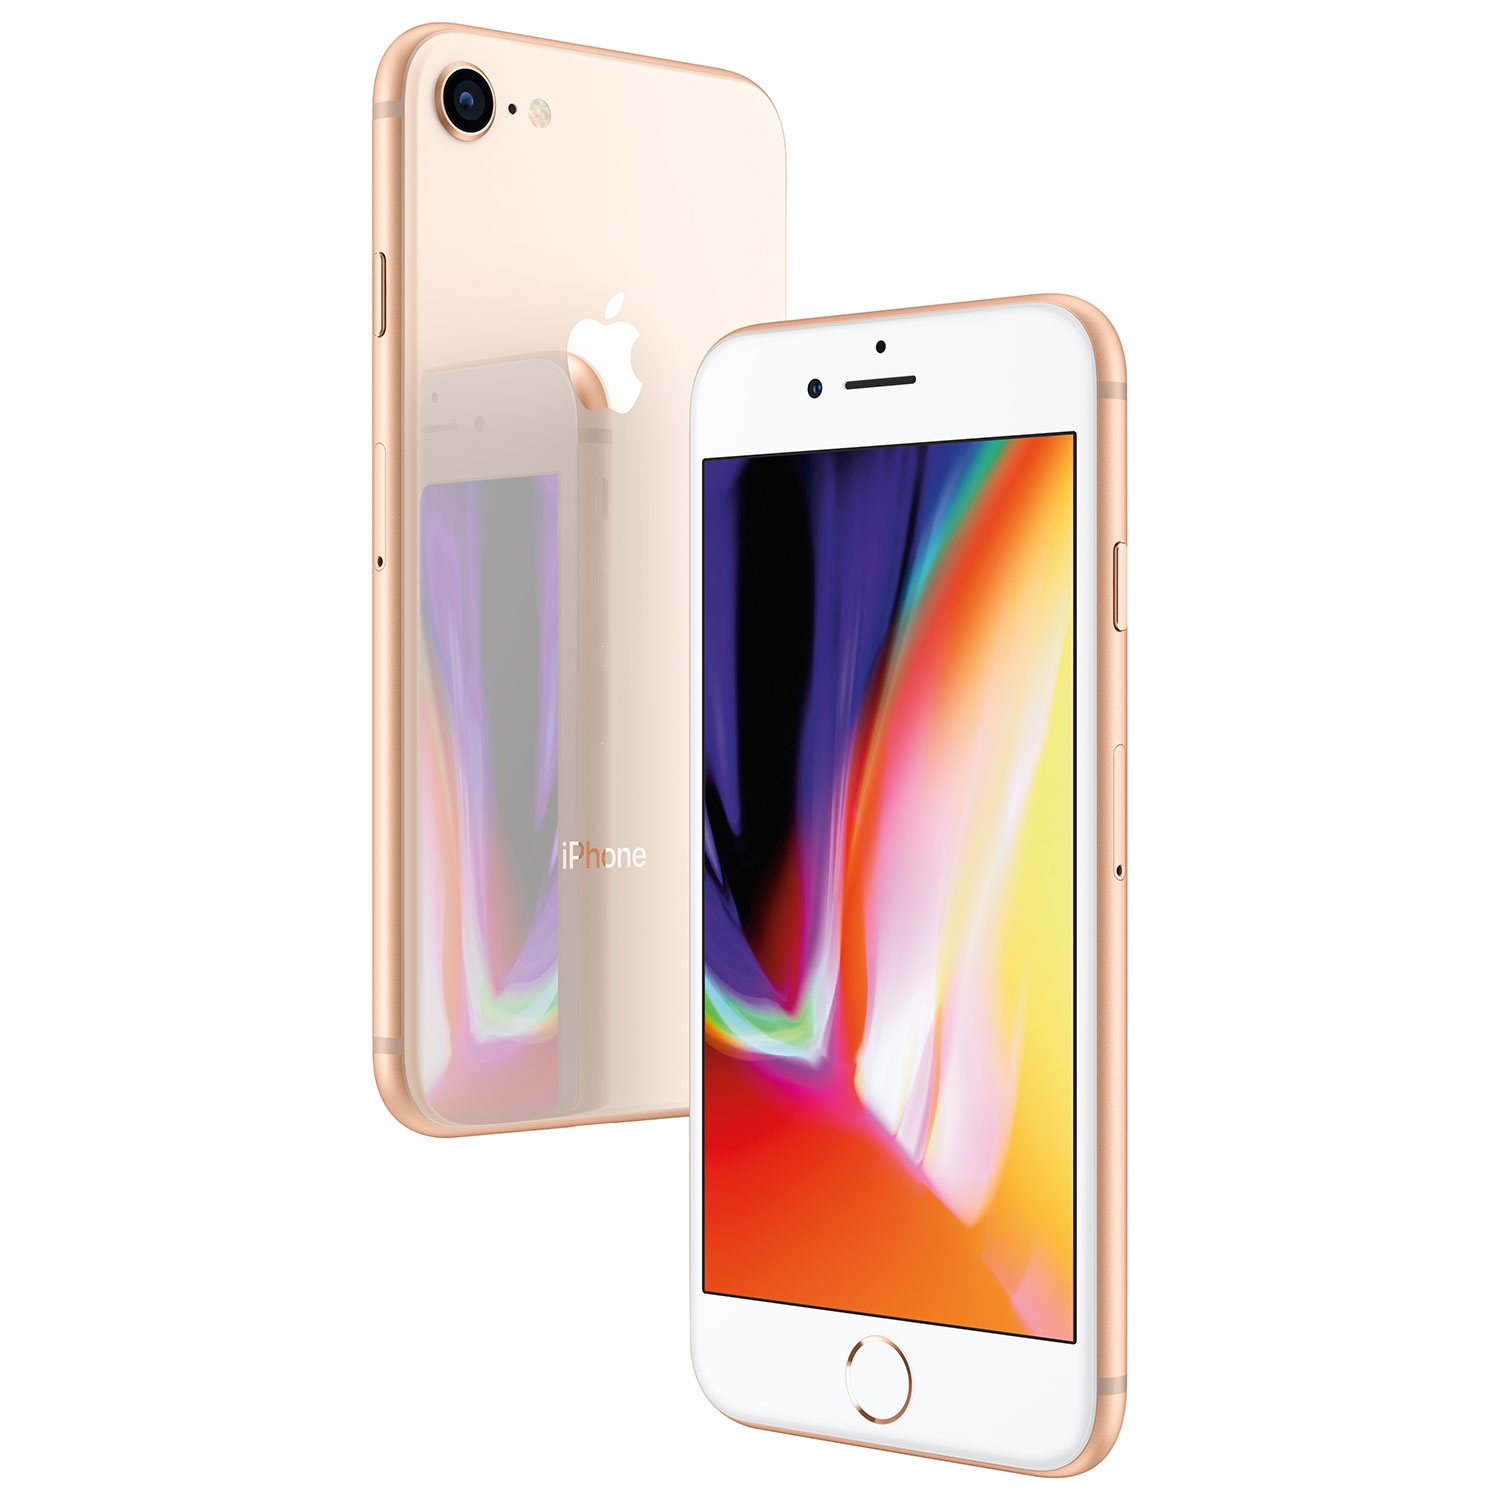 Apple iPhone 8 64GB Smartphone - Gold - Unlocked - Open Box